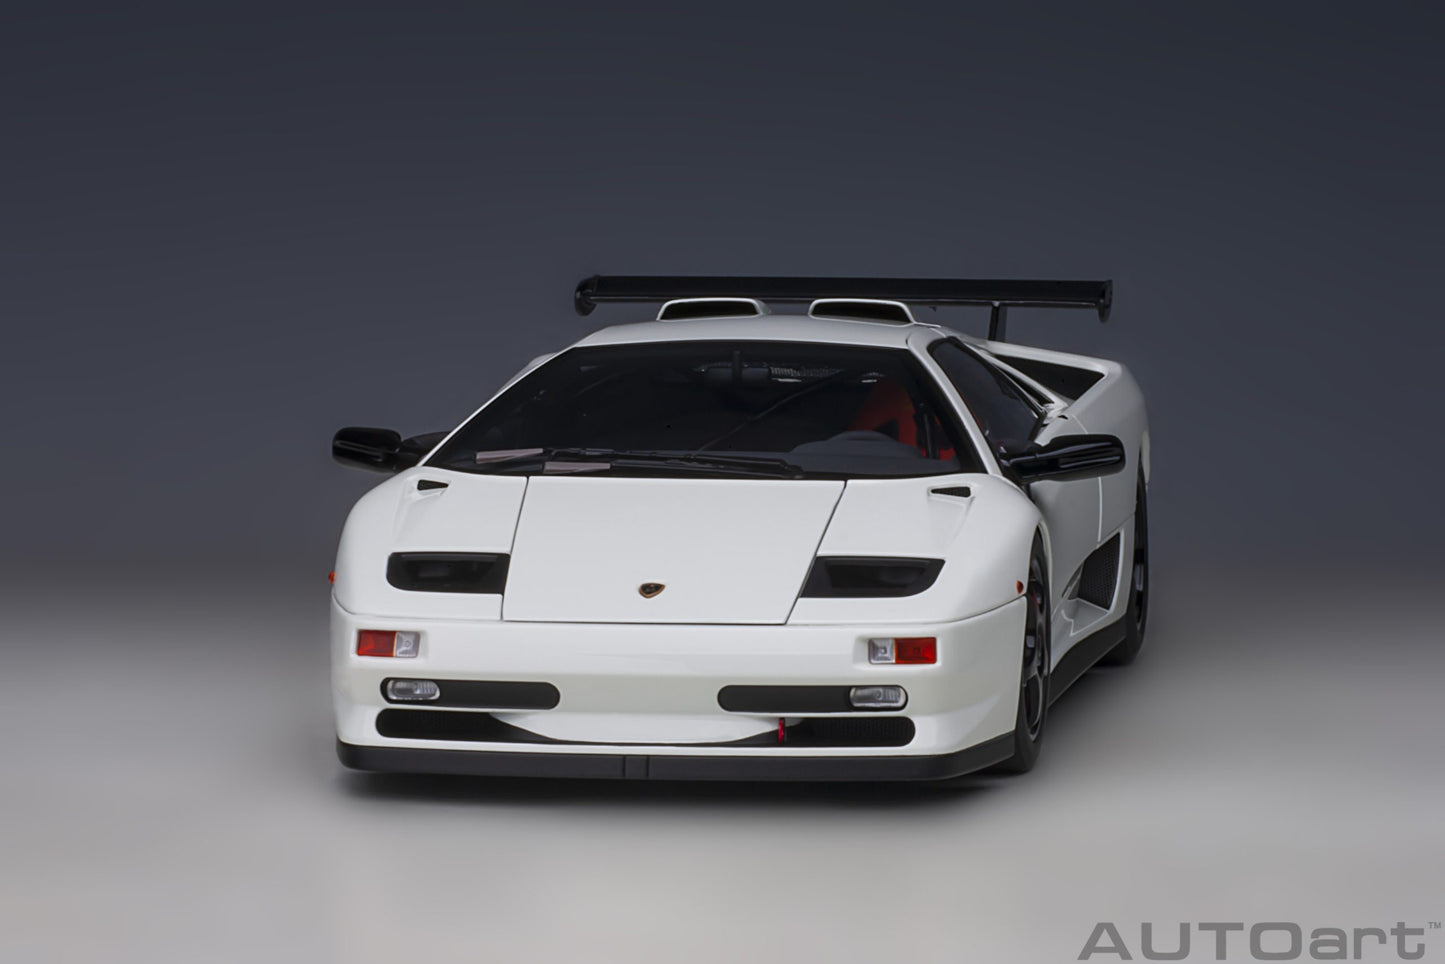 AUTOart 1:18 Lamborghini Diablo SV-R (Impact White) 79149